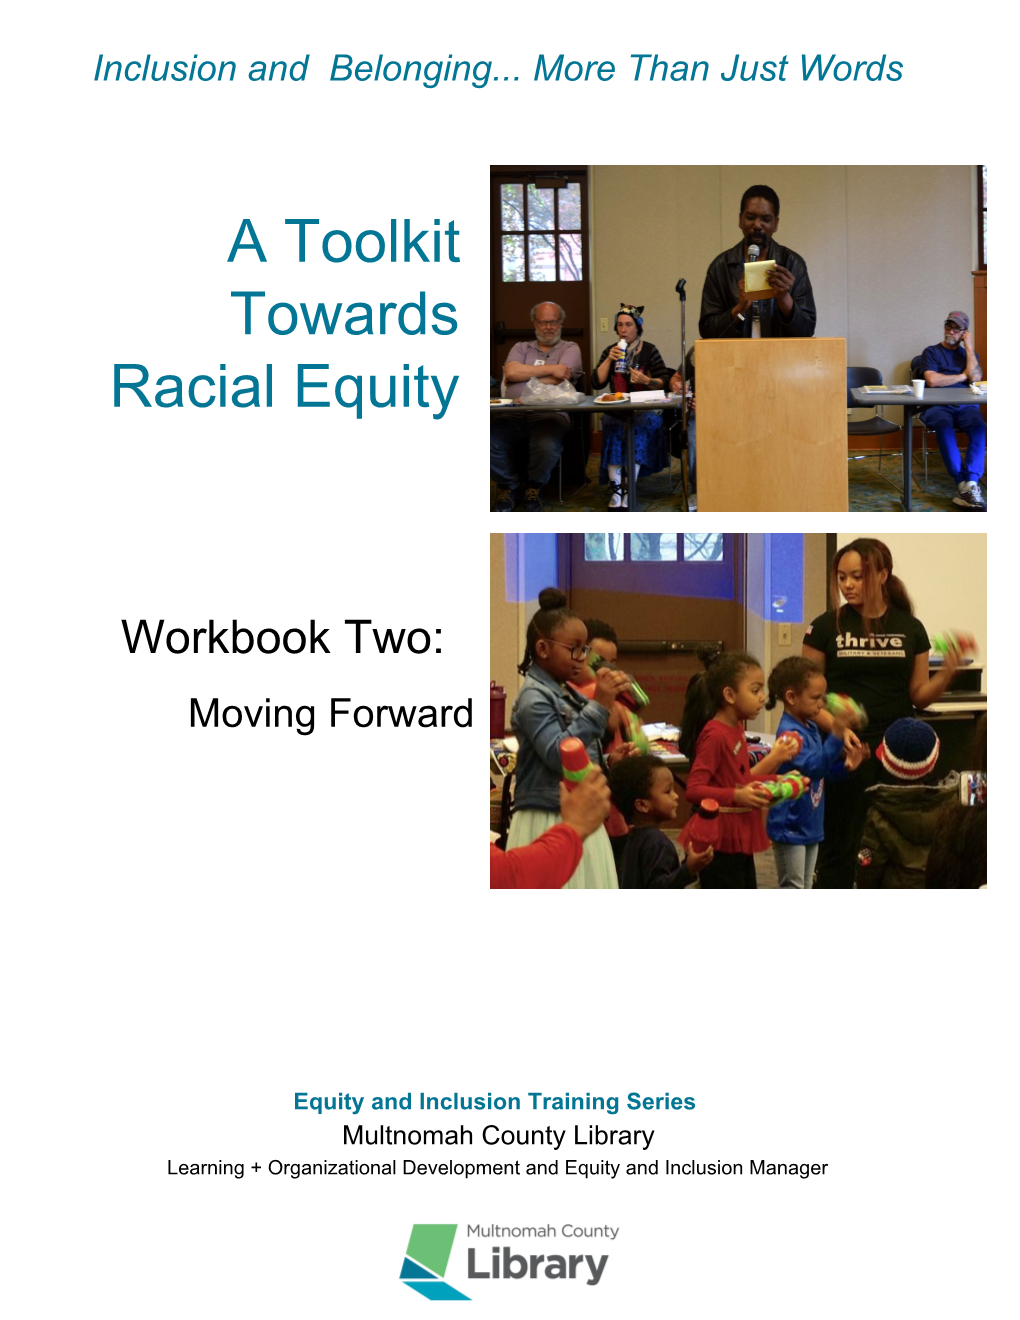 A Toolkit Towards Racial Equity